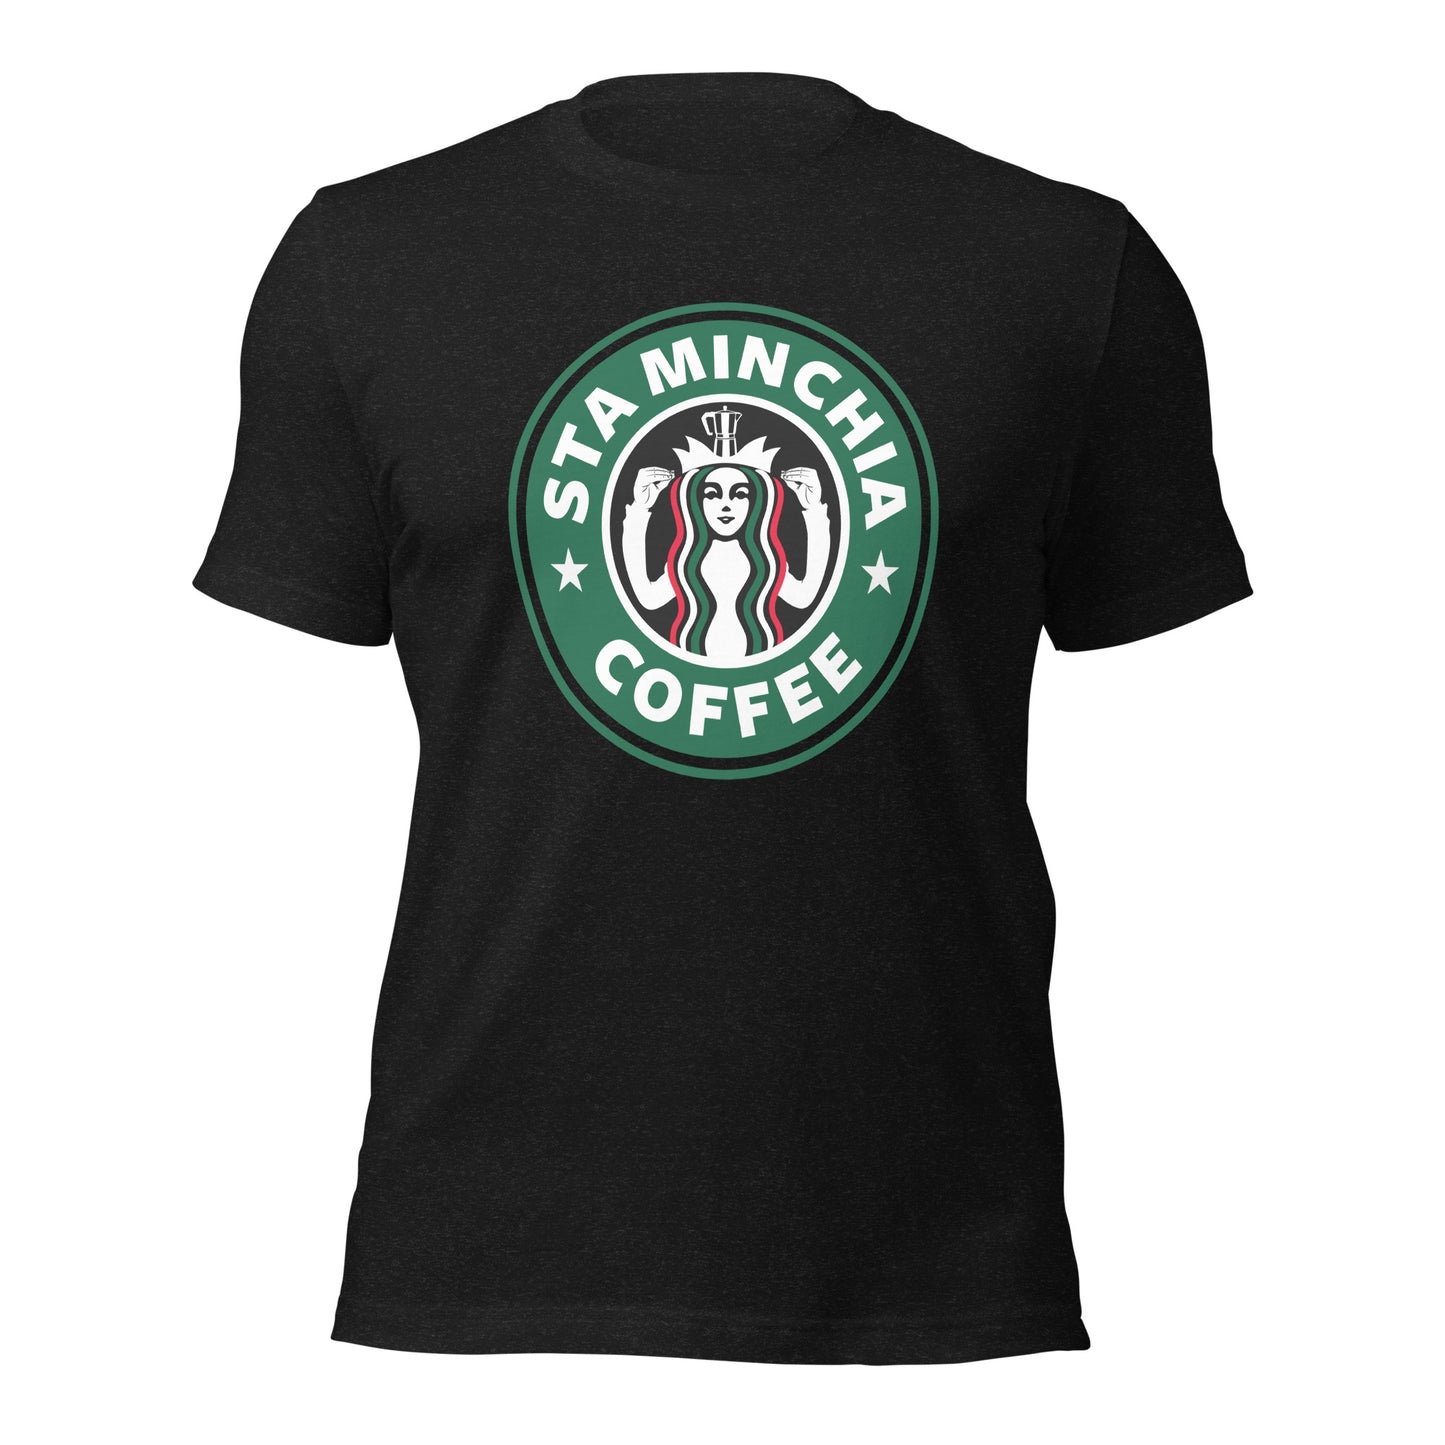 Sta Minchia Italian shirt in the funny slogan style of Star Bucks Coffee